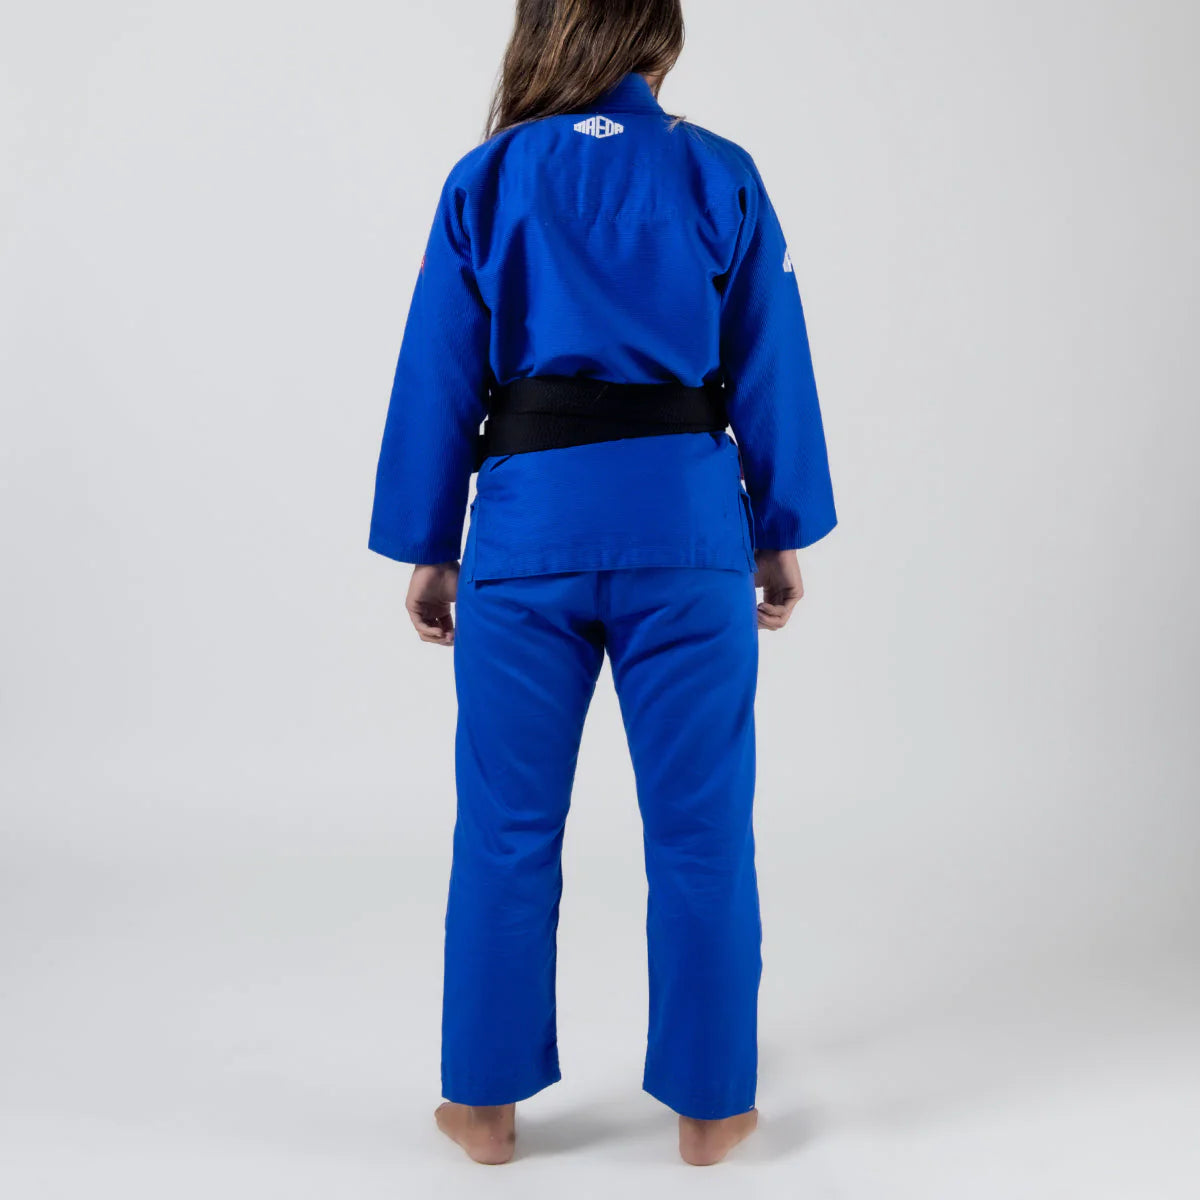 Maeda Red Label 3.0 Women's Jiu Jitsu Gi - Blau